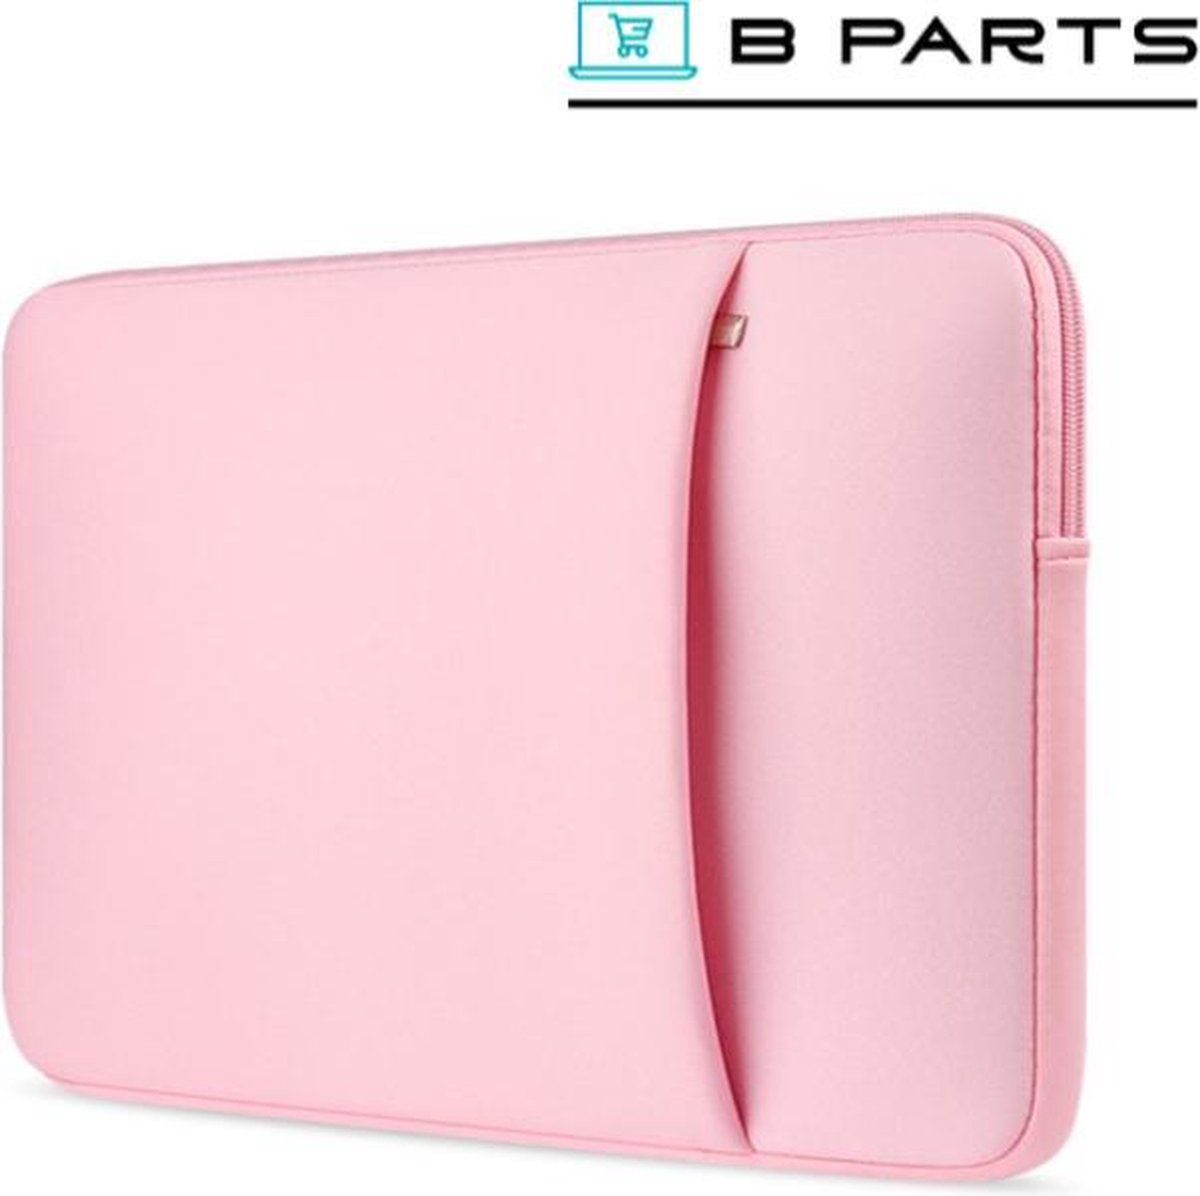 BParts - 13 inch Extra vak Laptop sleeve - Beschermhoes laptop - Laptophoes - Extra zachte binnenkant - Lichtroze